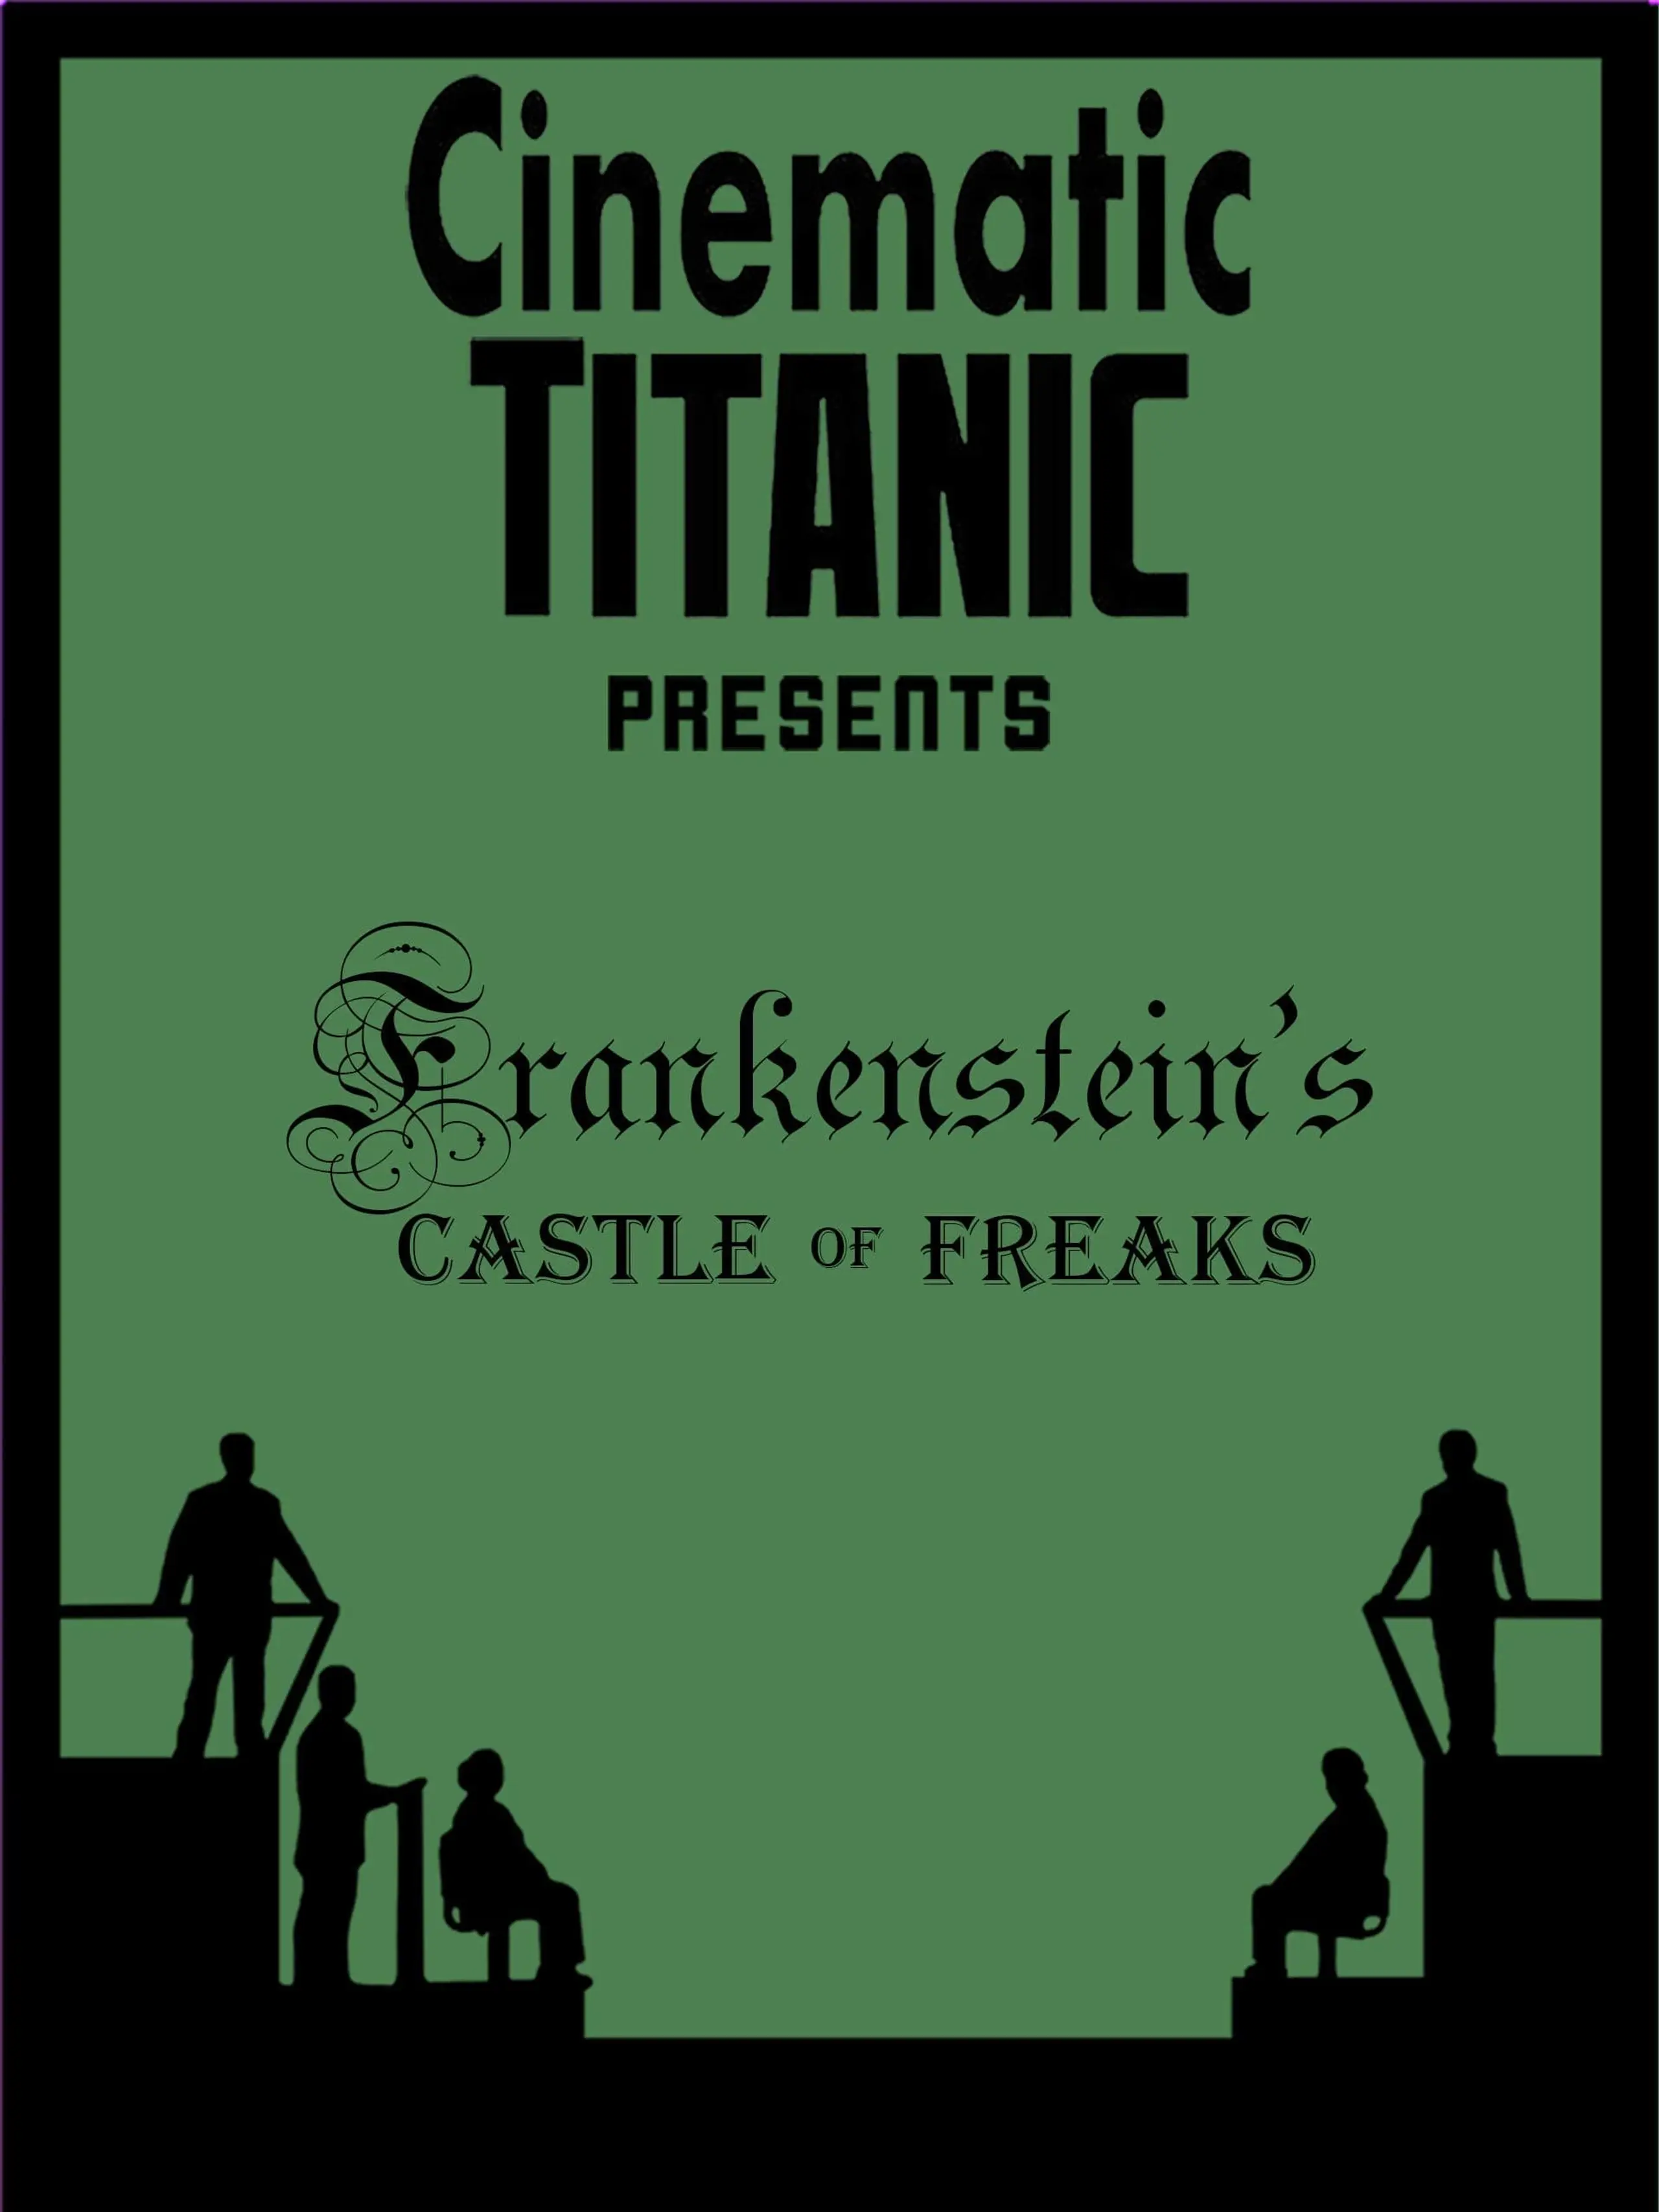 Cinematic Titanic: Frankenstein's Castle of Freaks